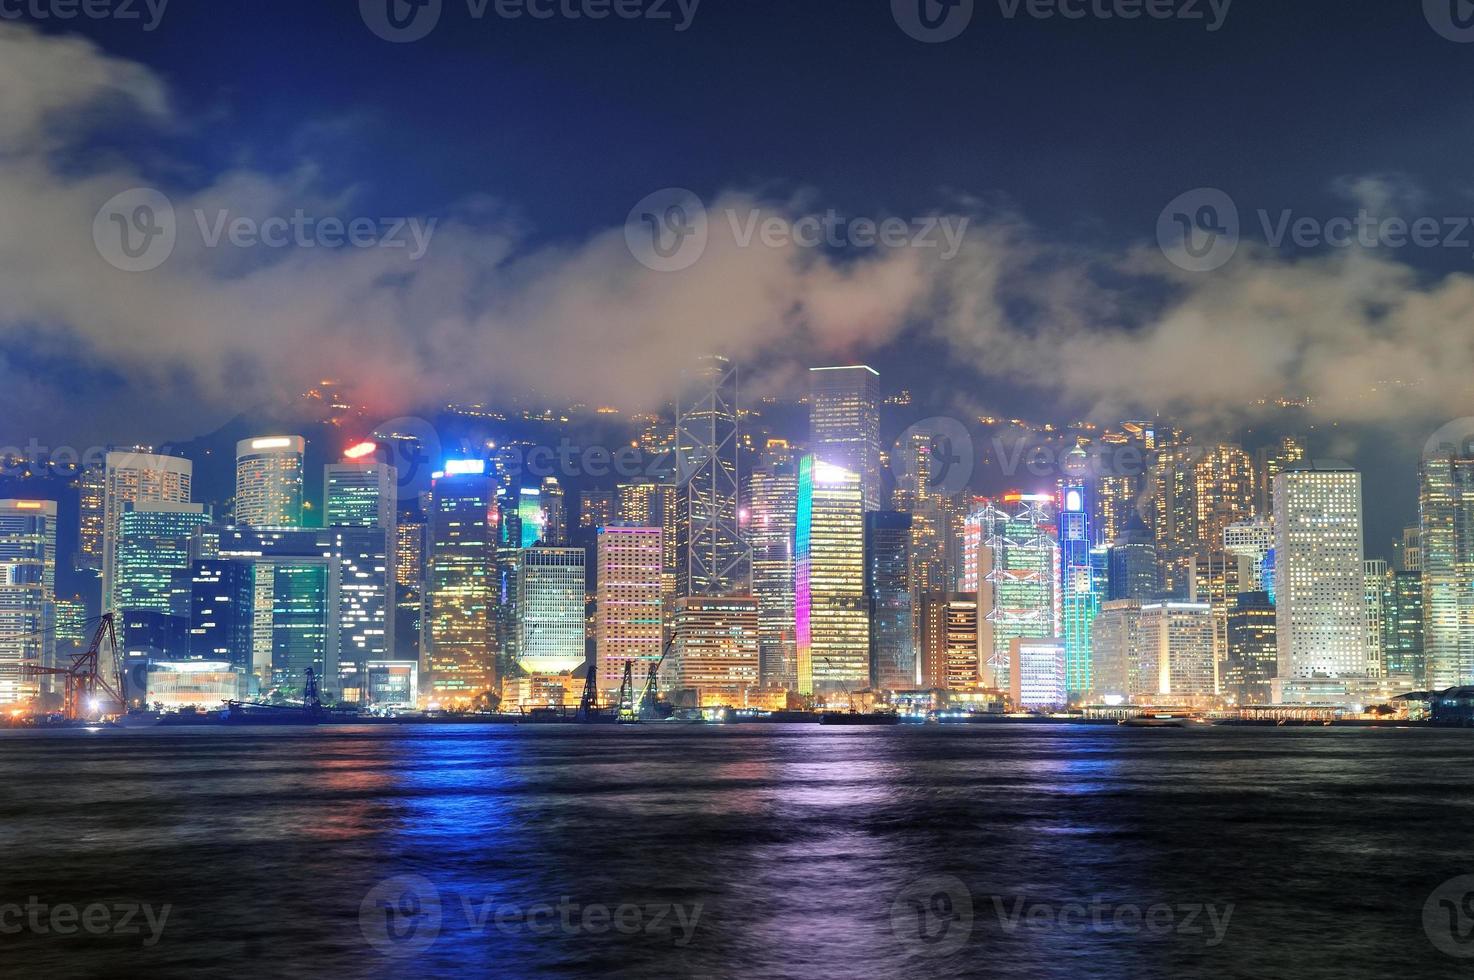 Hong Kong Skyline foto